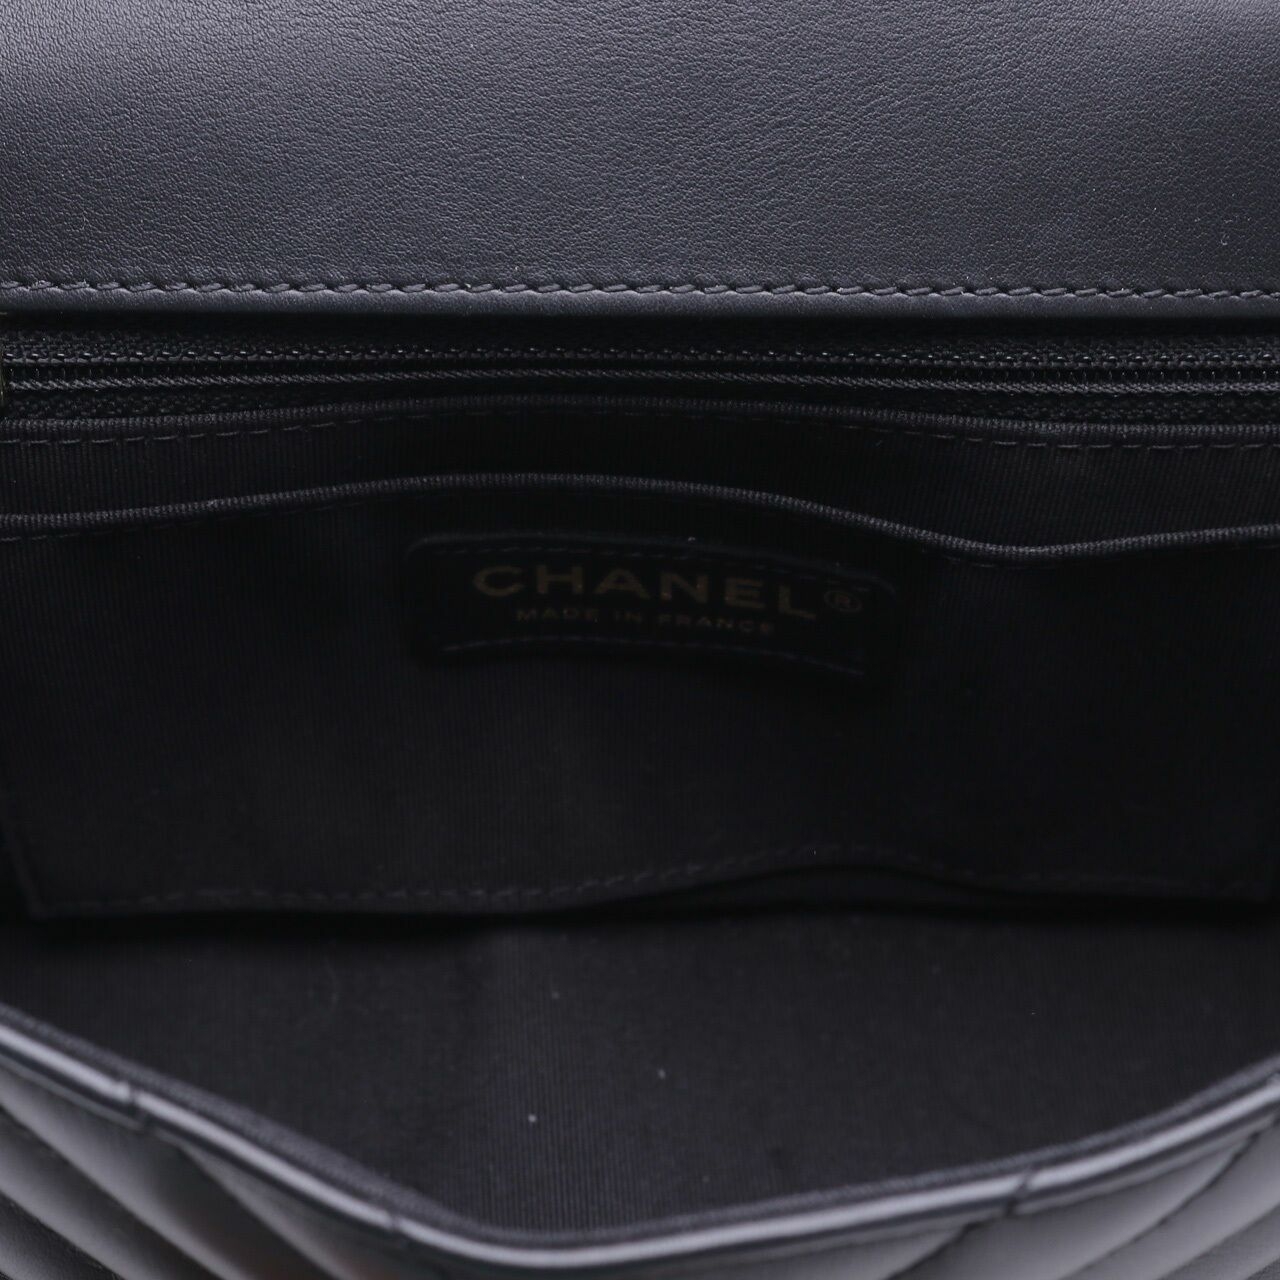 Chanel Chevron Flap Black Shoulder Bag	